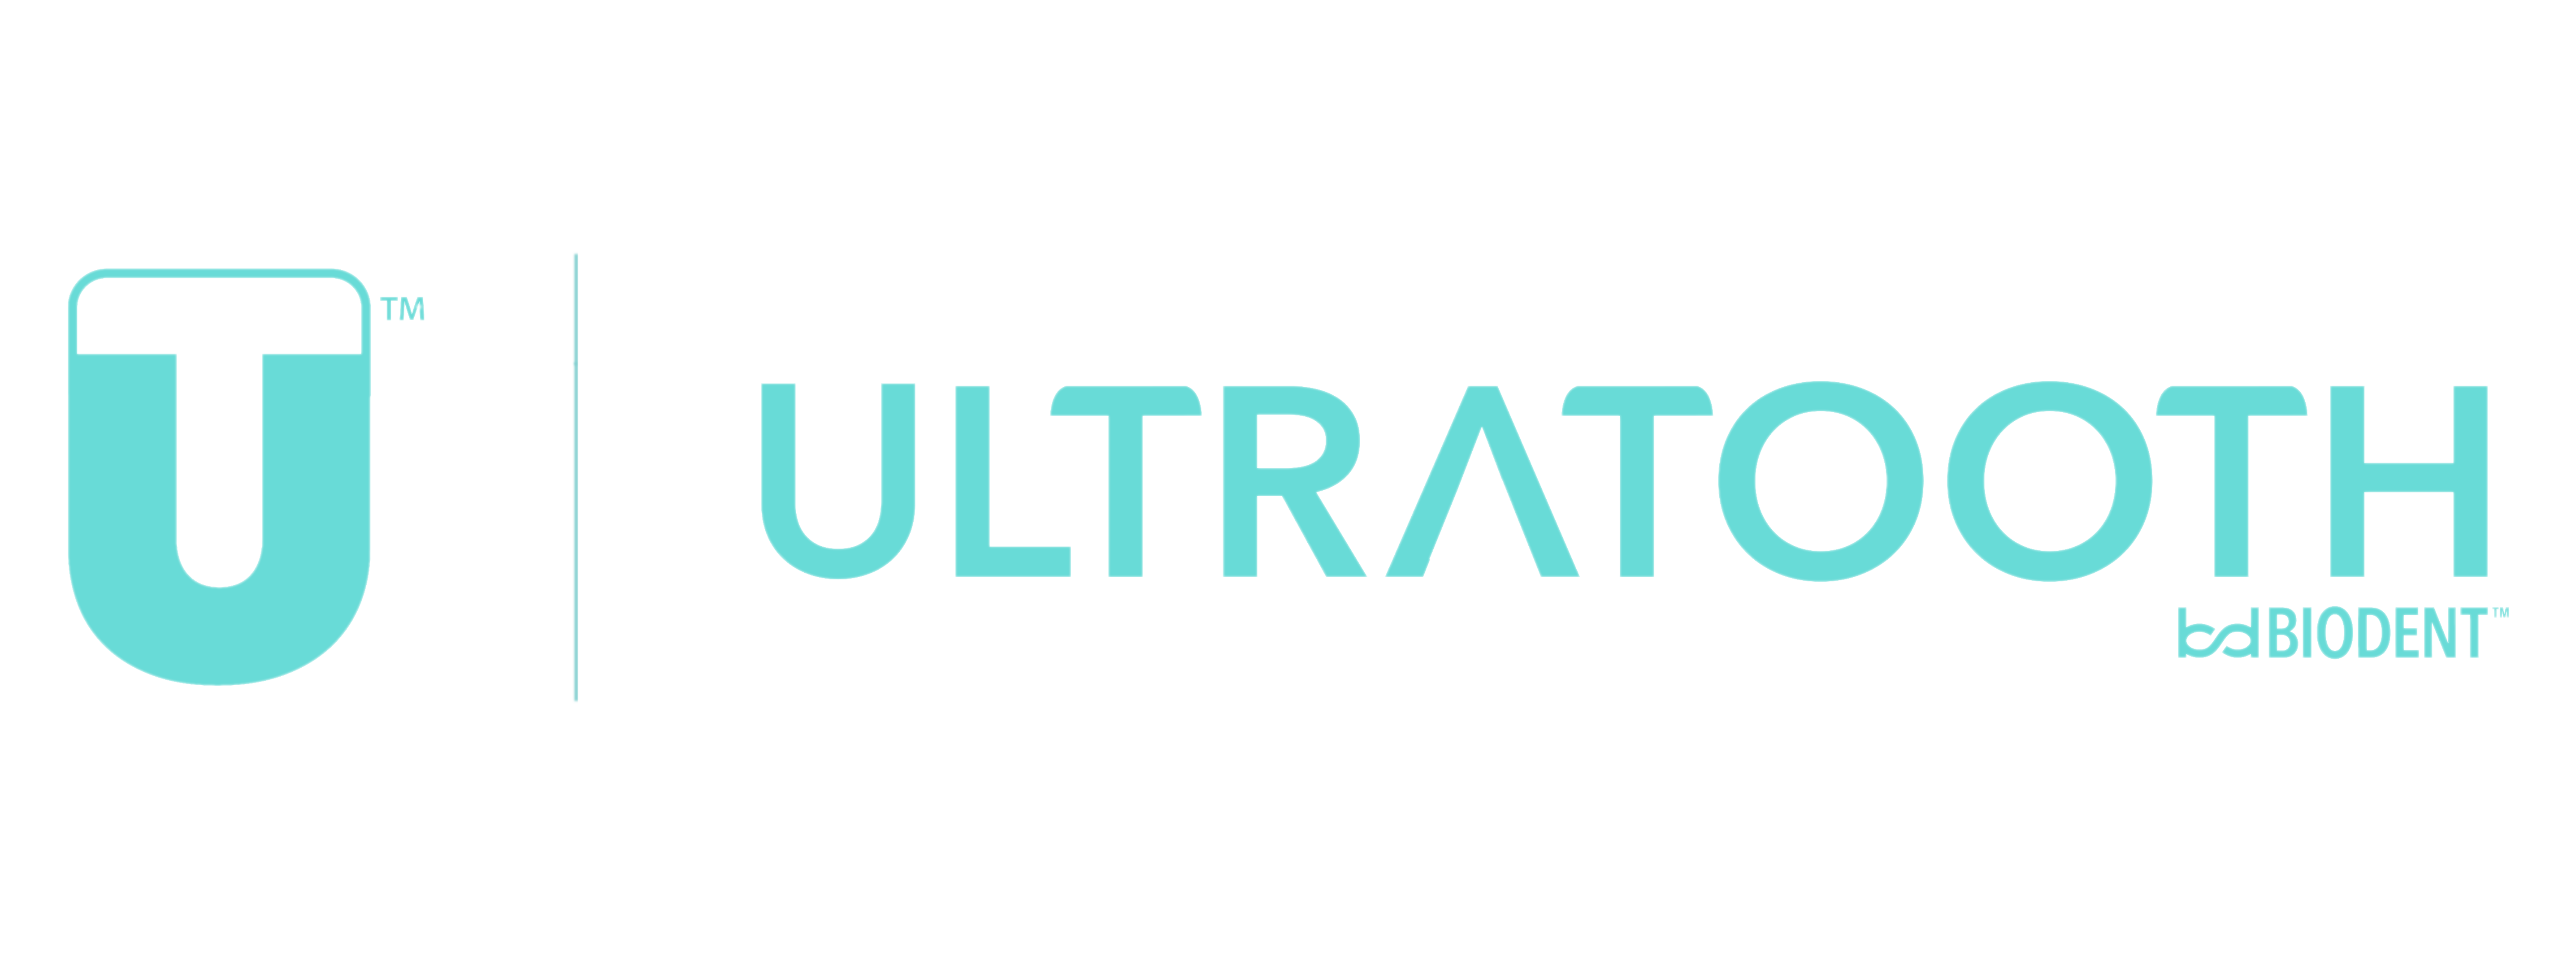 Ultratooth Logo